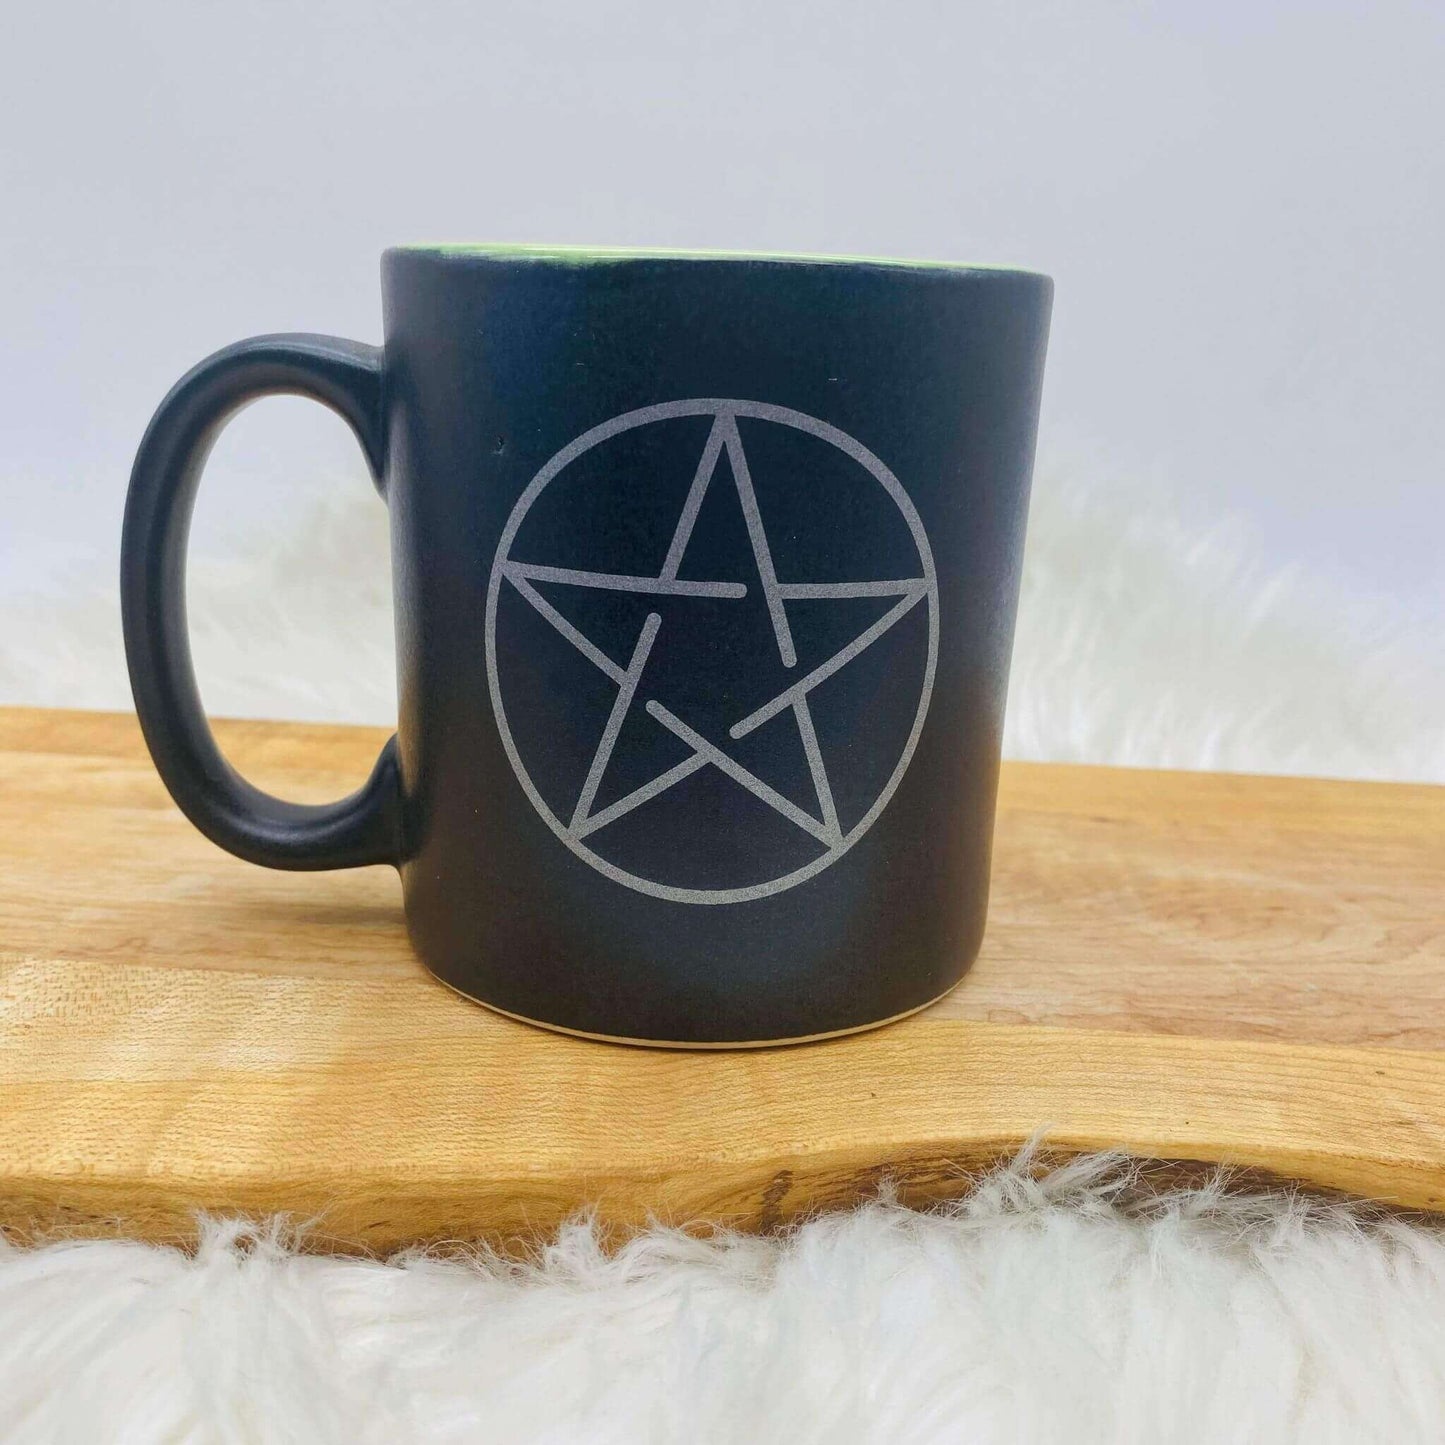 Pentagram Coffee Mug at $17 only from Spiral Rain